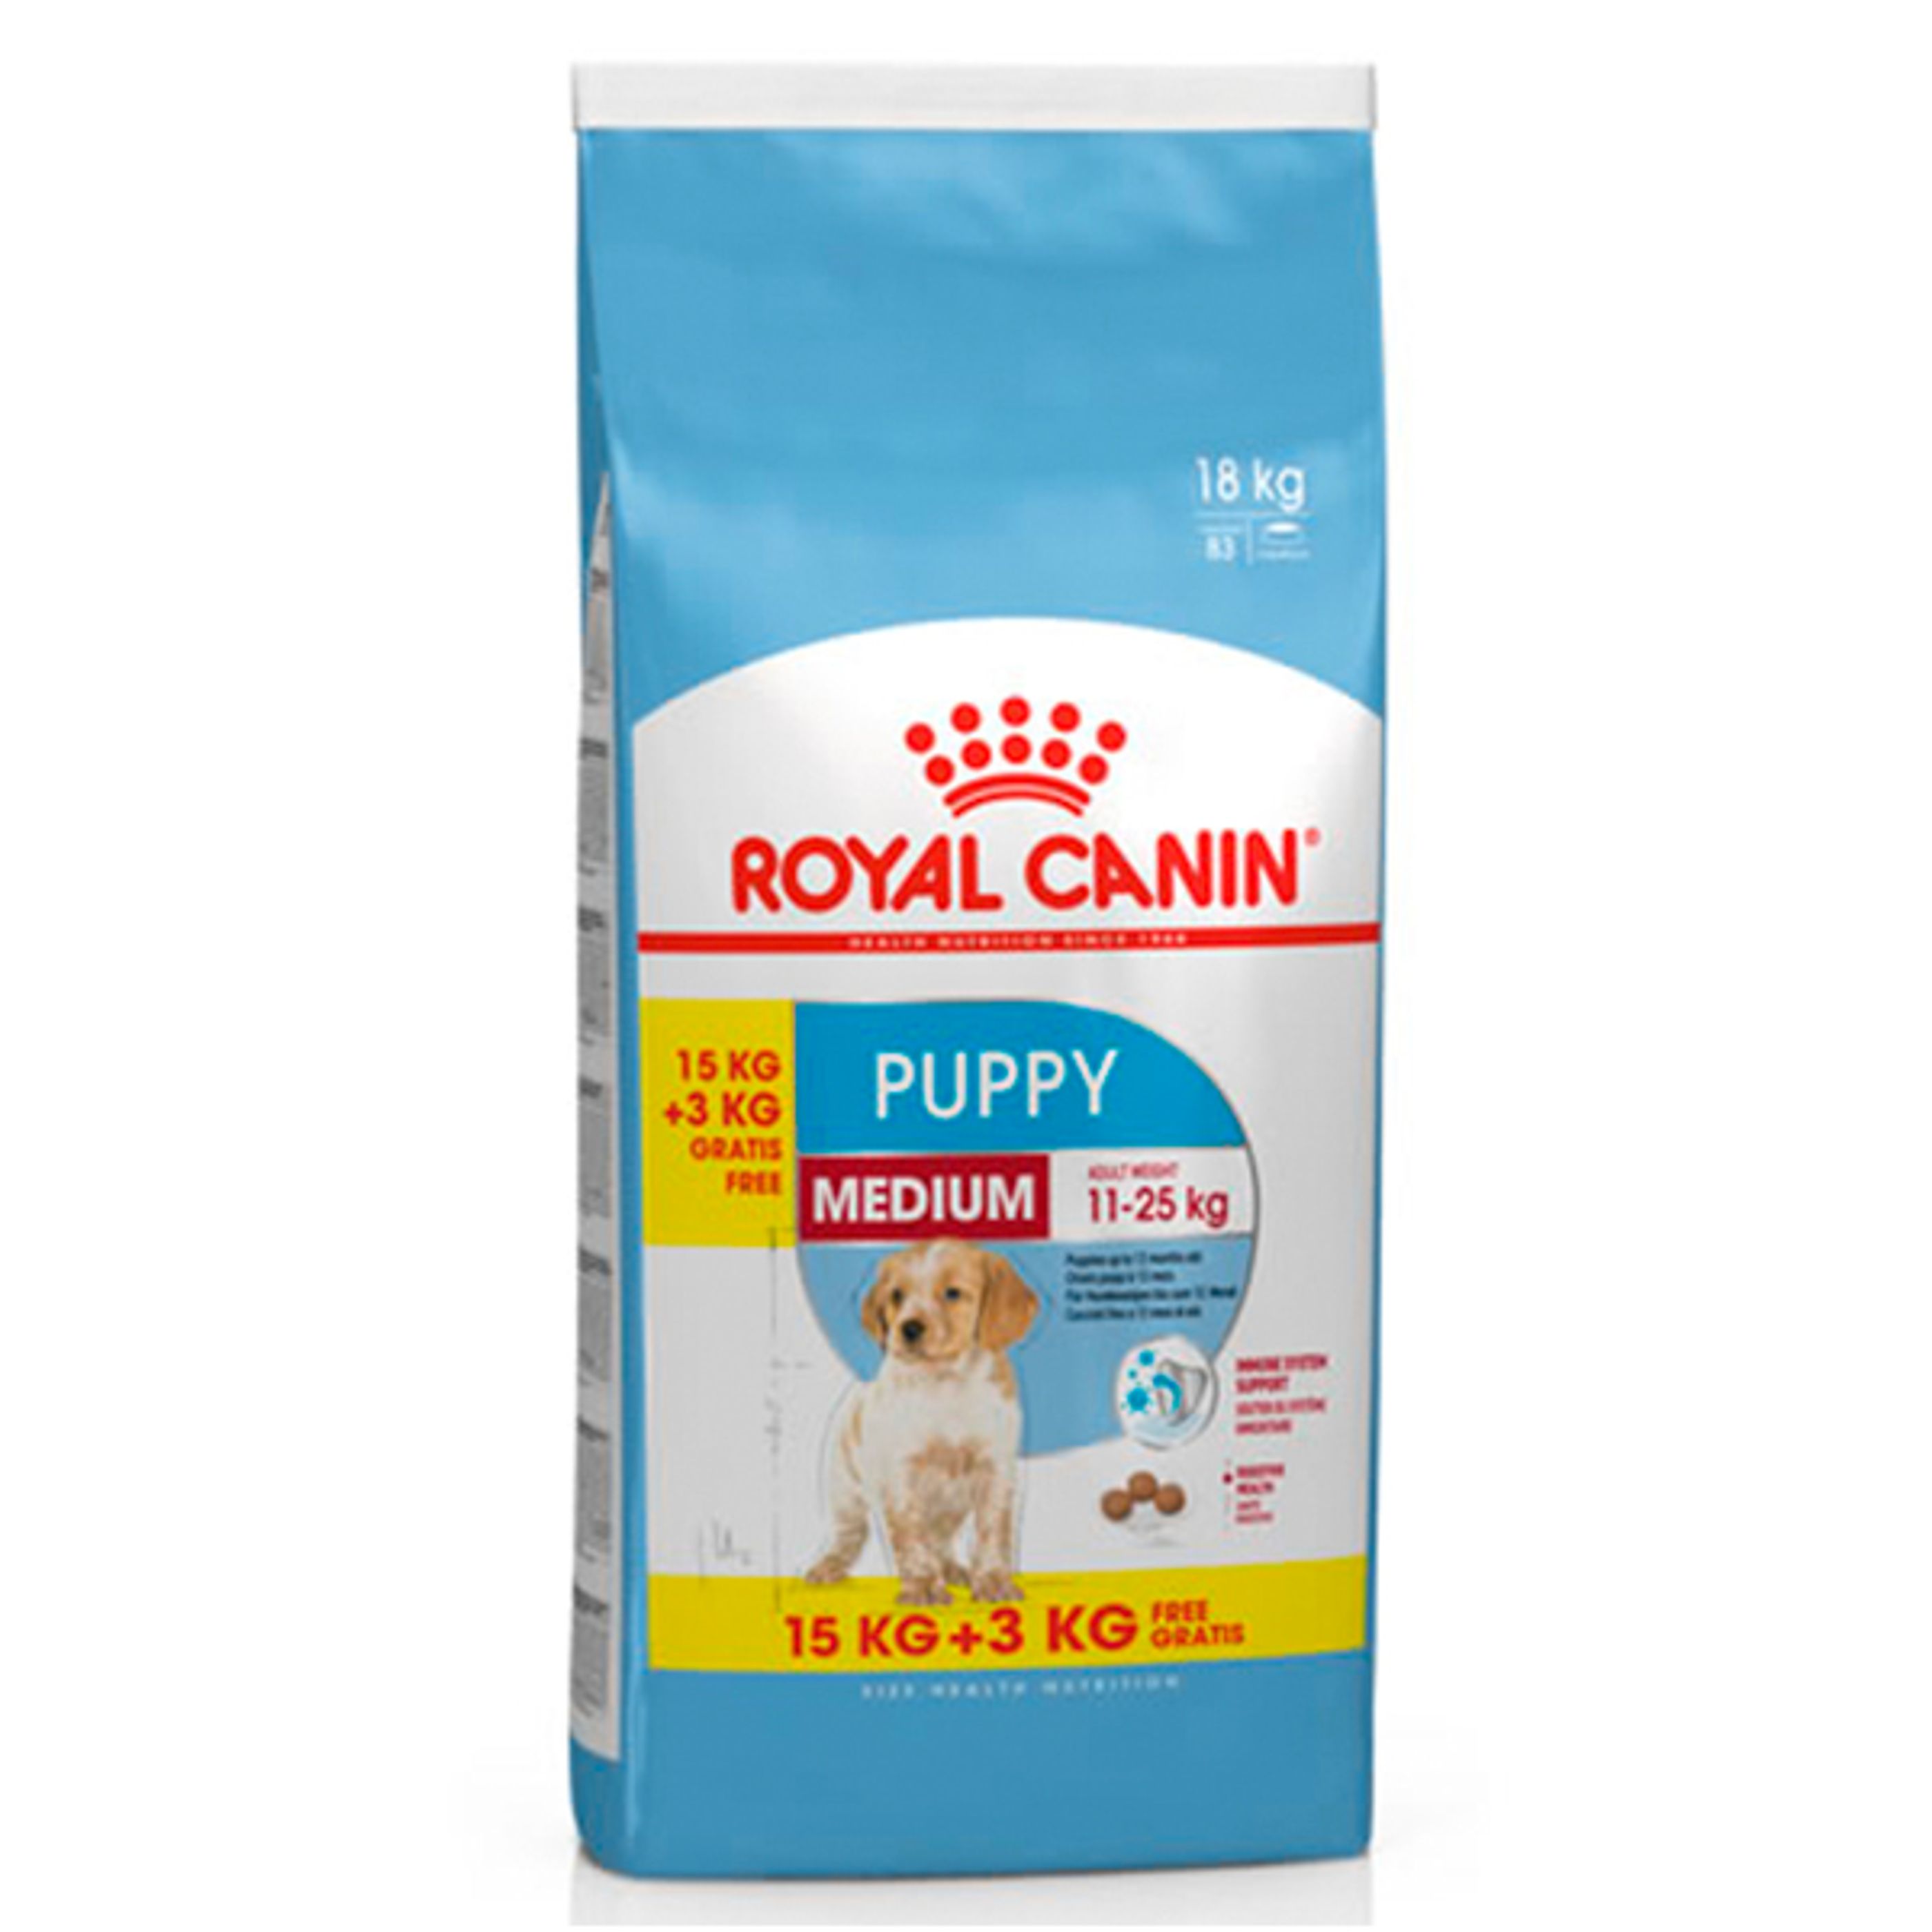 Royal Canin Medium Puppy Bónus 15 kg + 3 Kg de Oferta